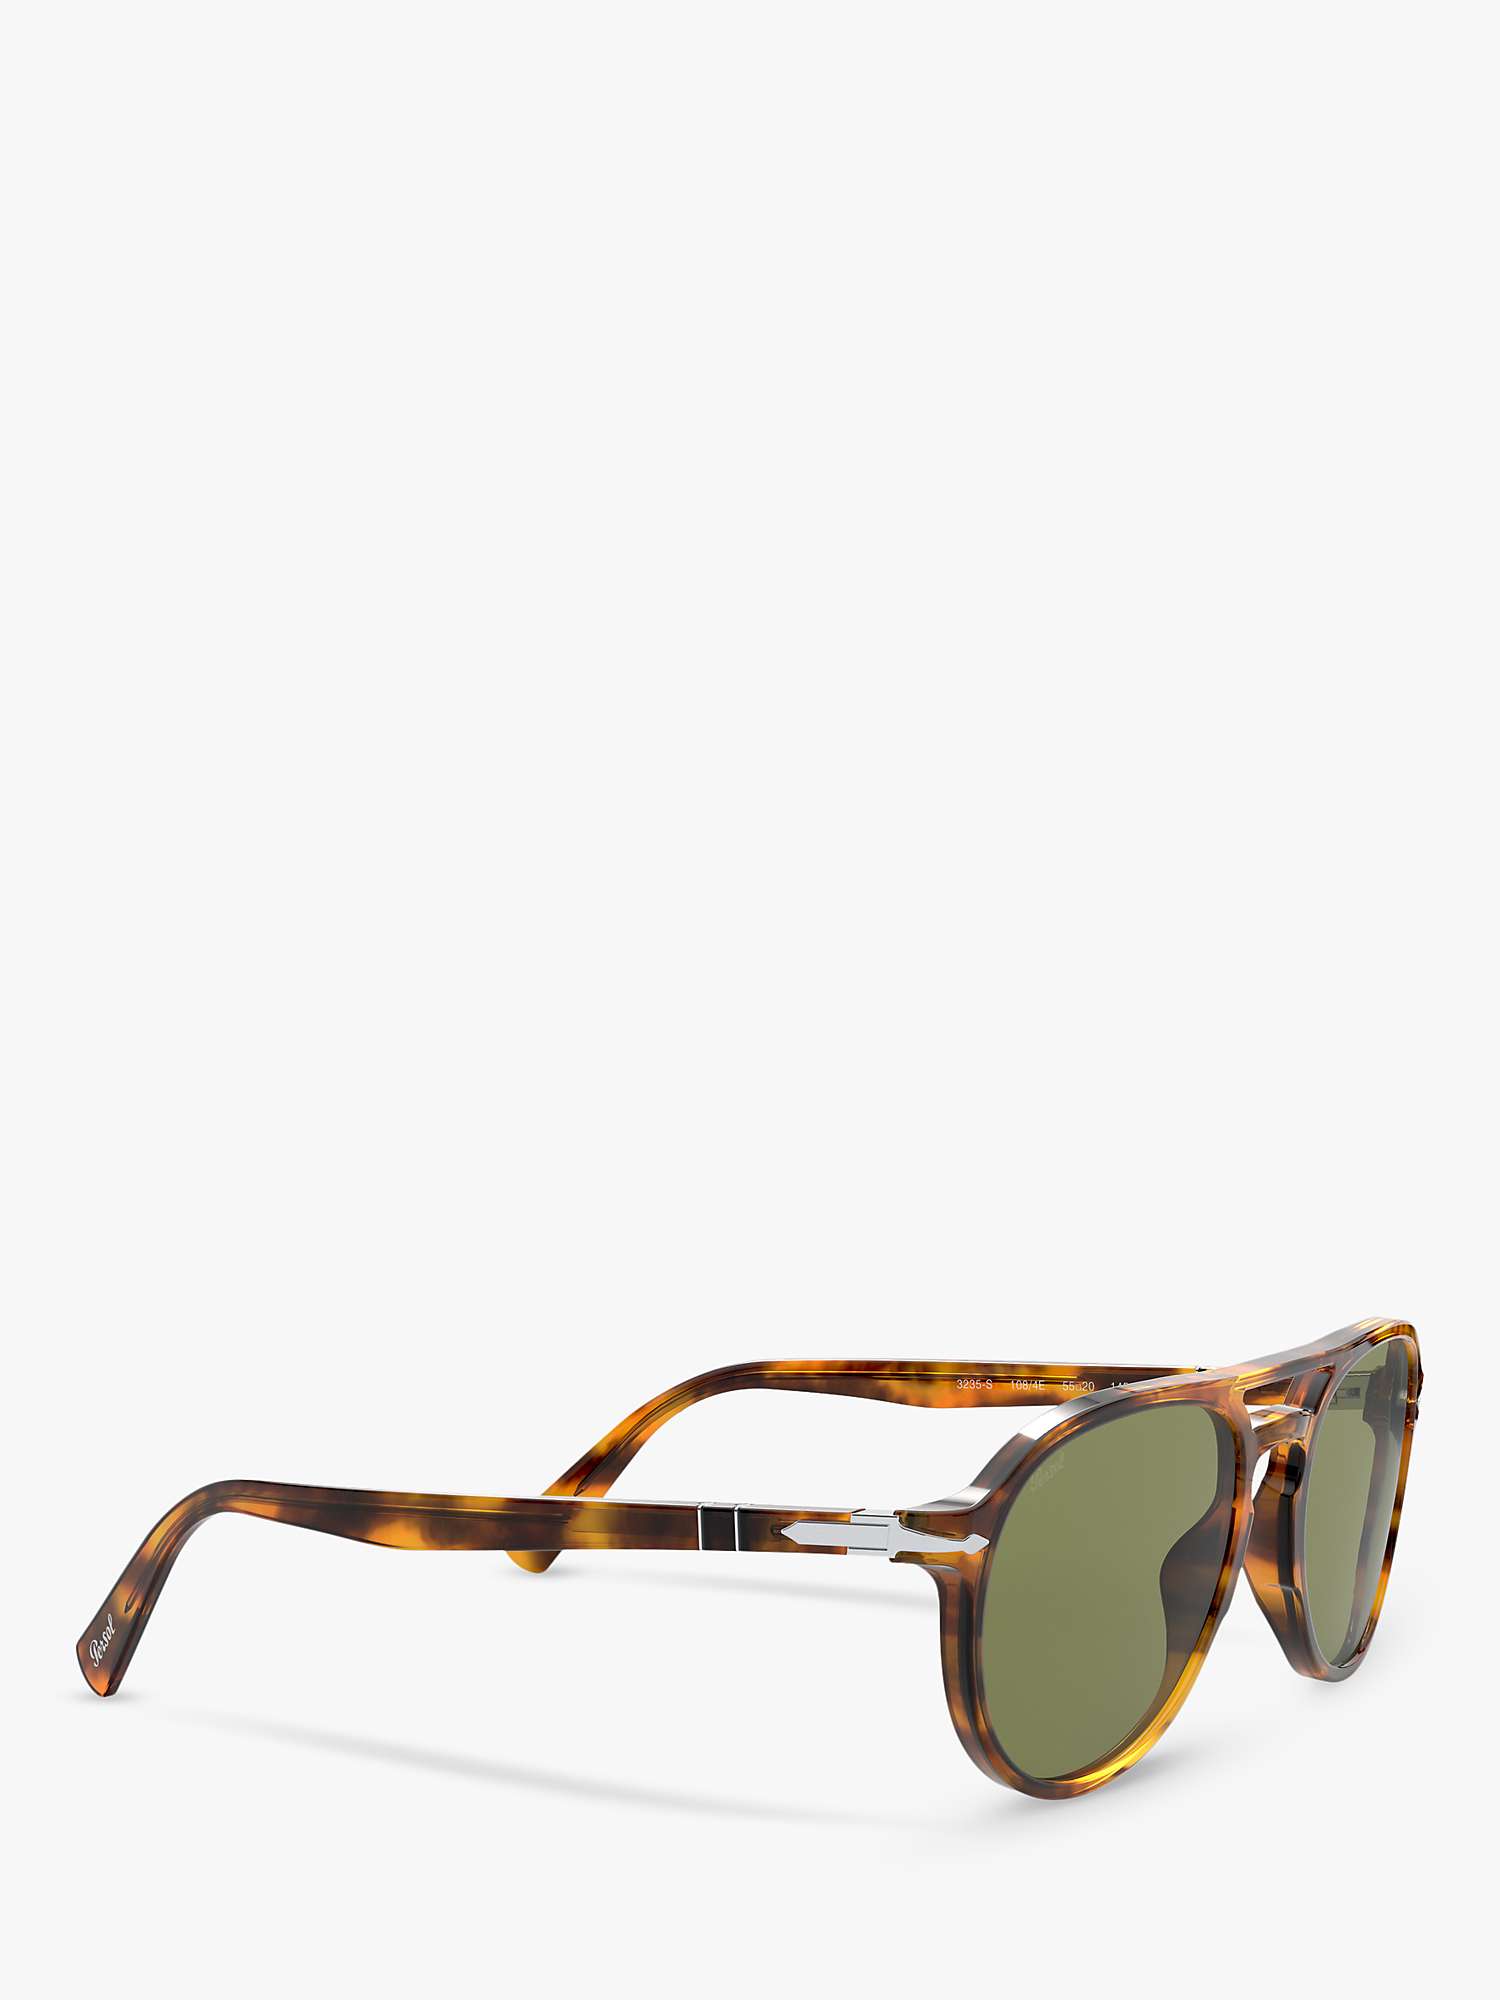 Buy Persol PO3235S Women's Aviator Sunglasses, Light Havana/Green Online at johnlewis.com